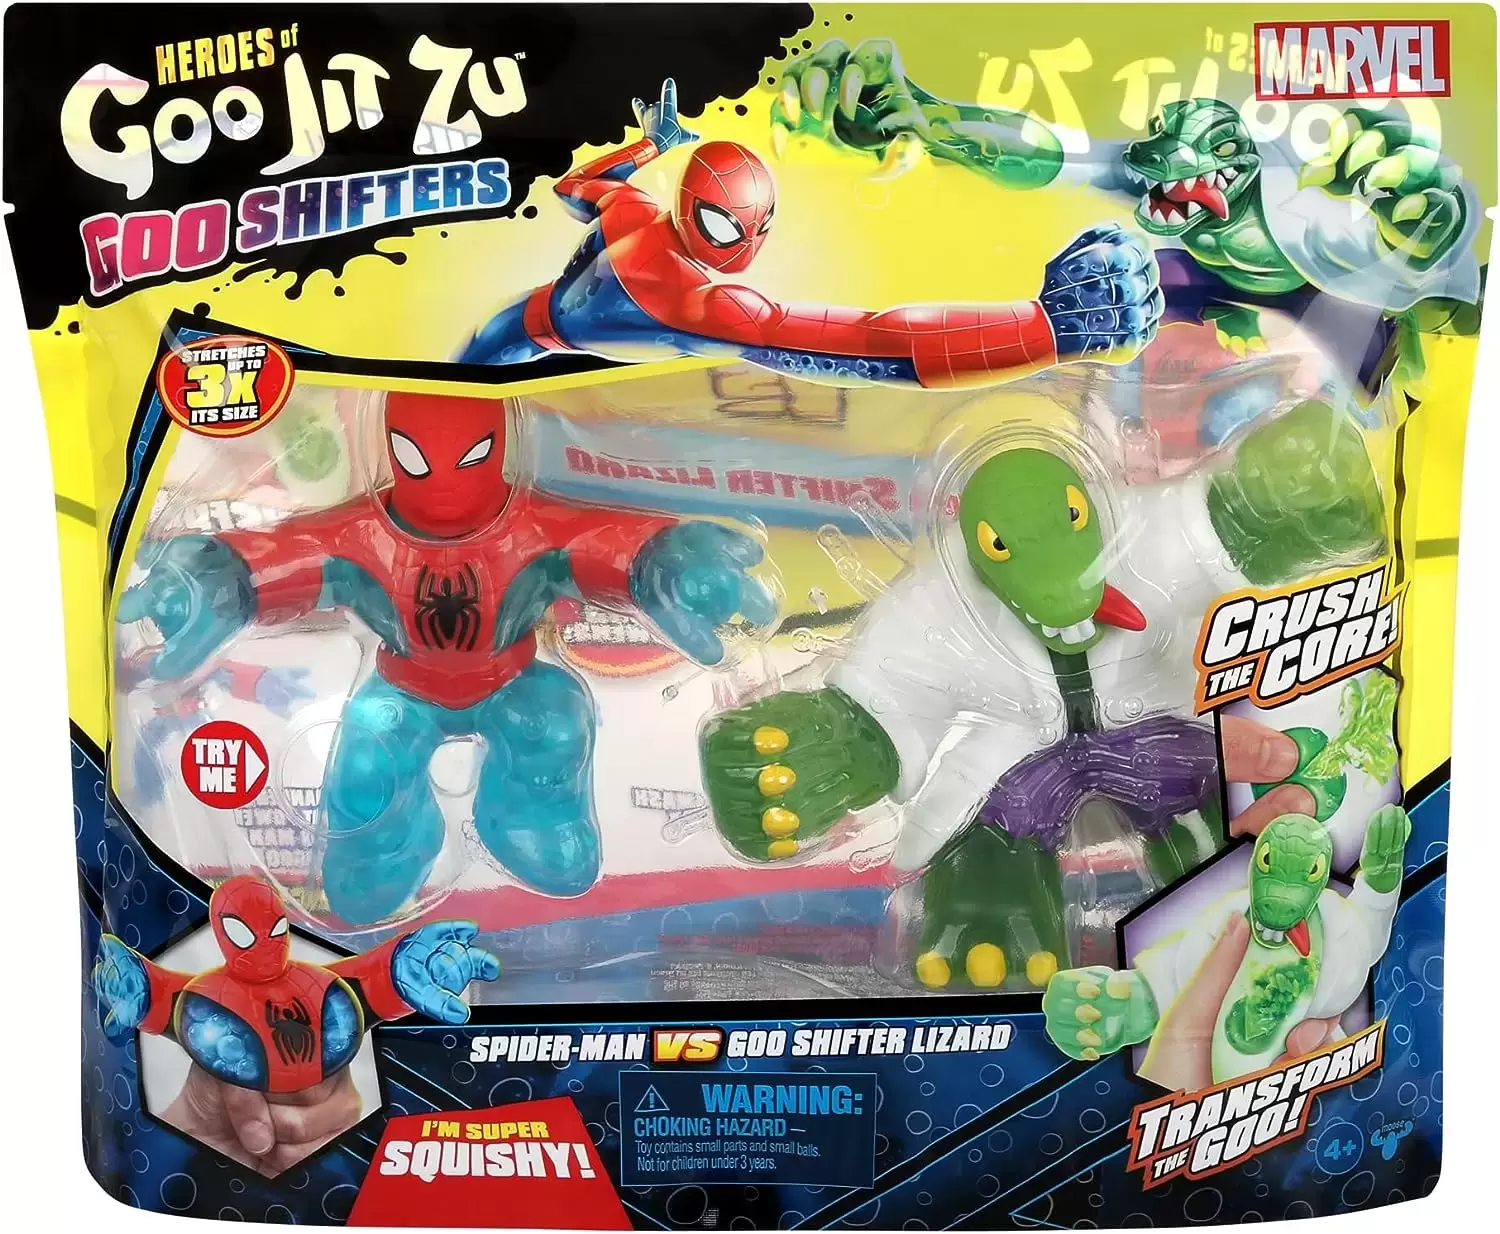 Heroes of Goo Jit Zu - Marvel - Spider-Man VS Goo Shifter Lizard